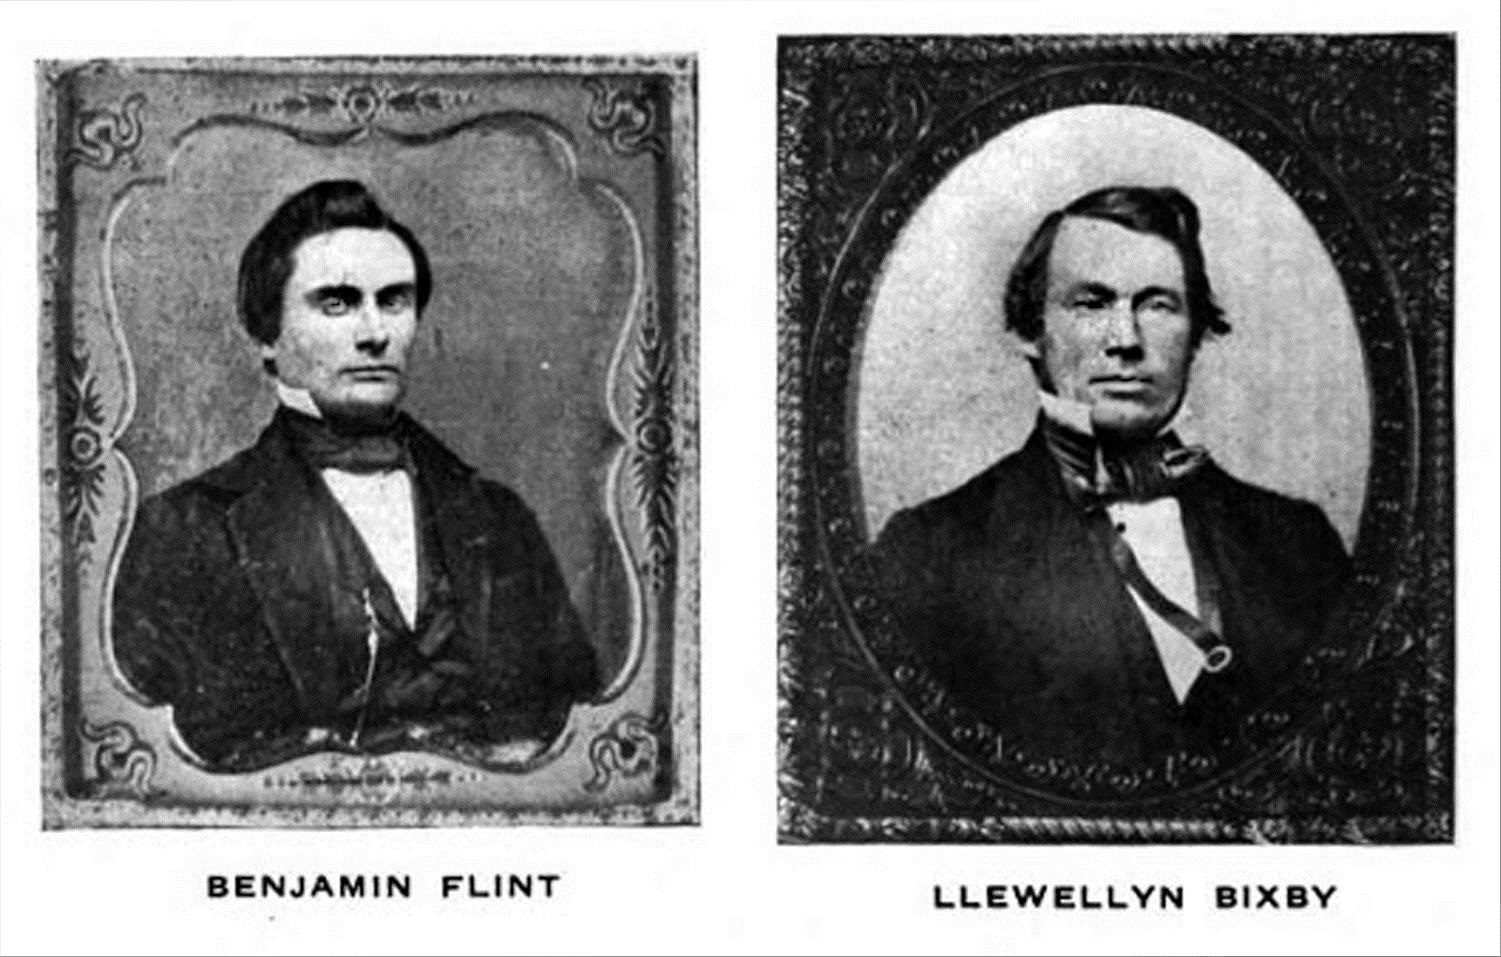 Old photographs of Benjamin Flint and LLewellyn Bixby